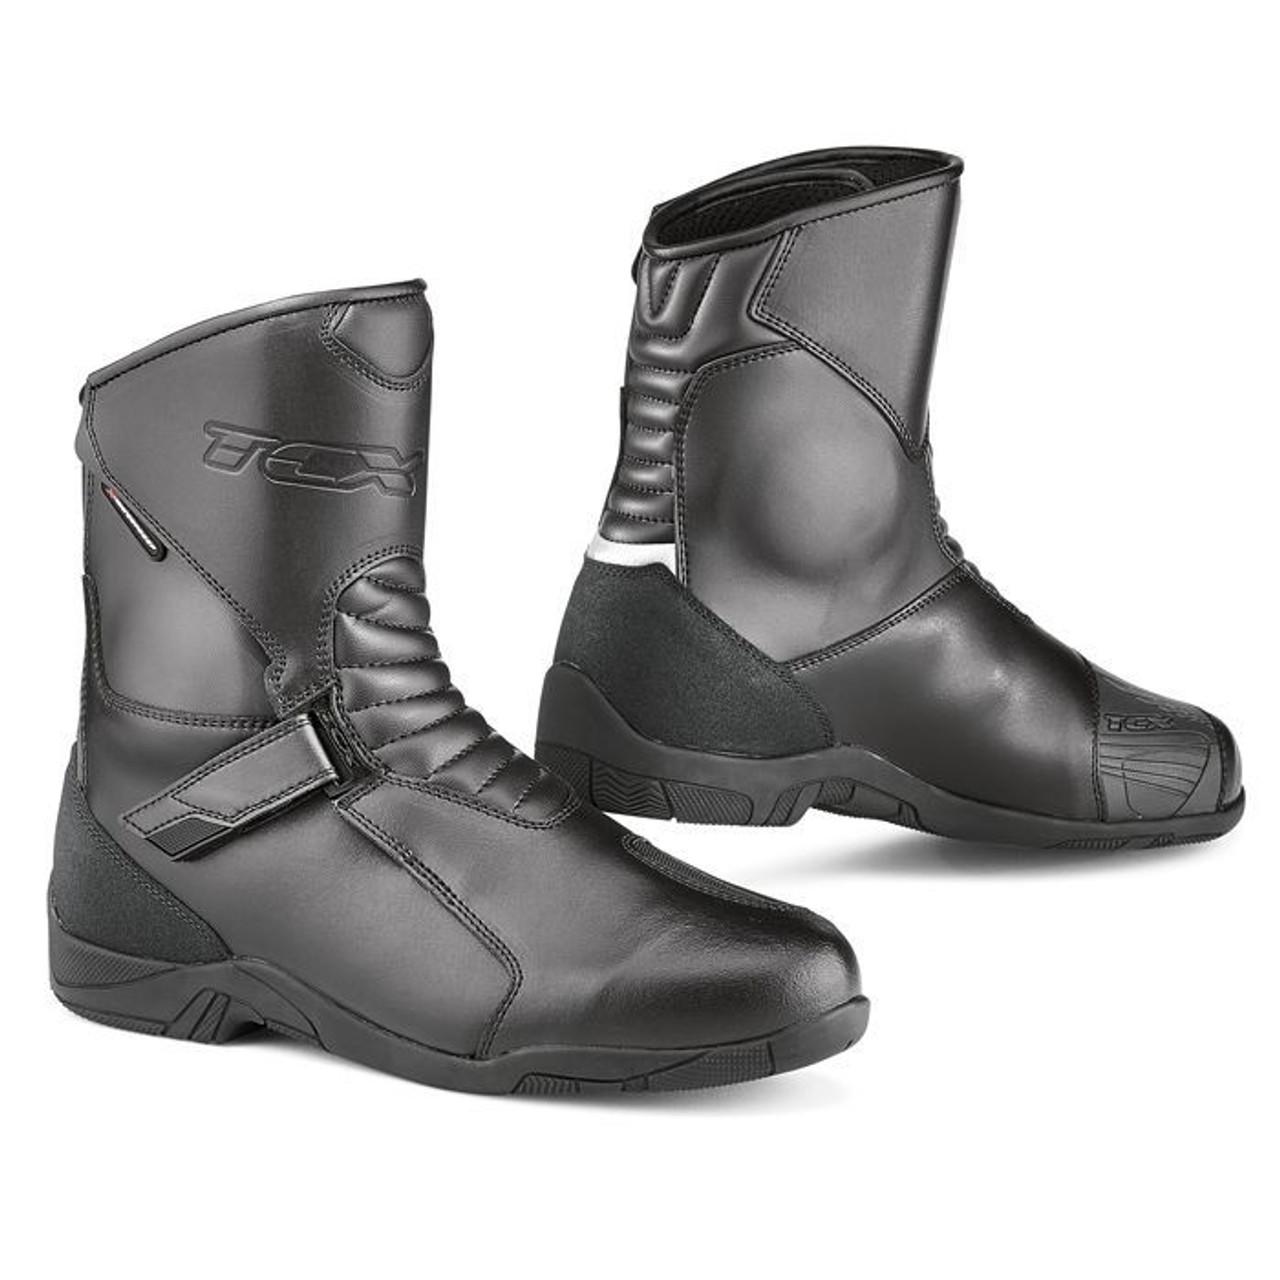 tcx waterproof motorcycle boots